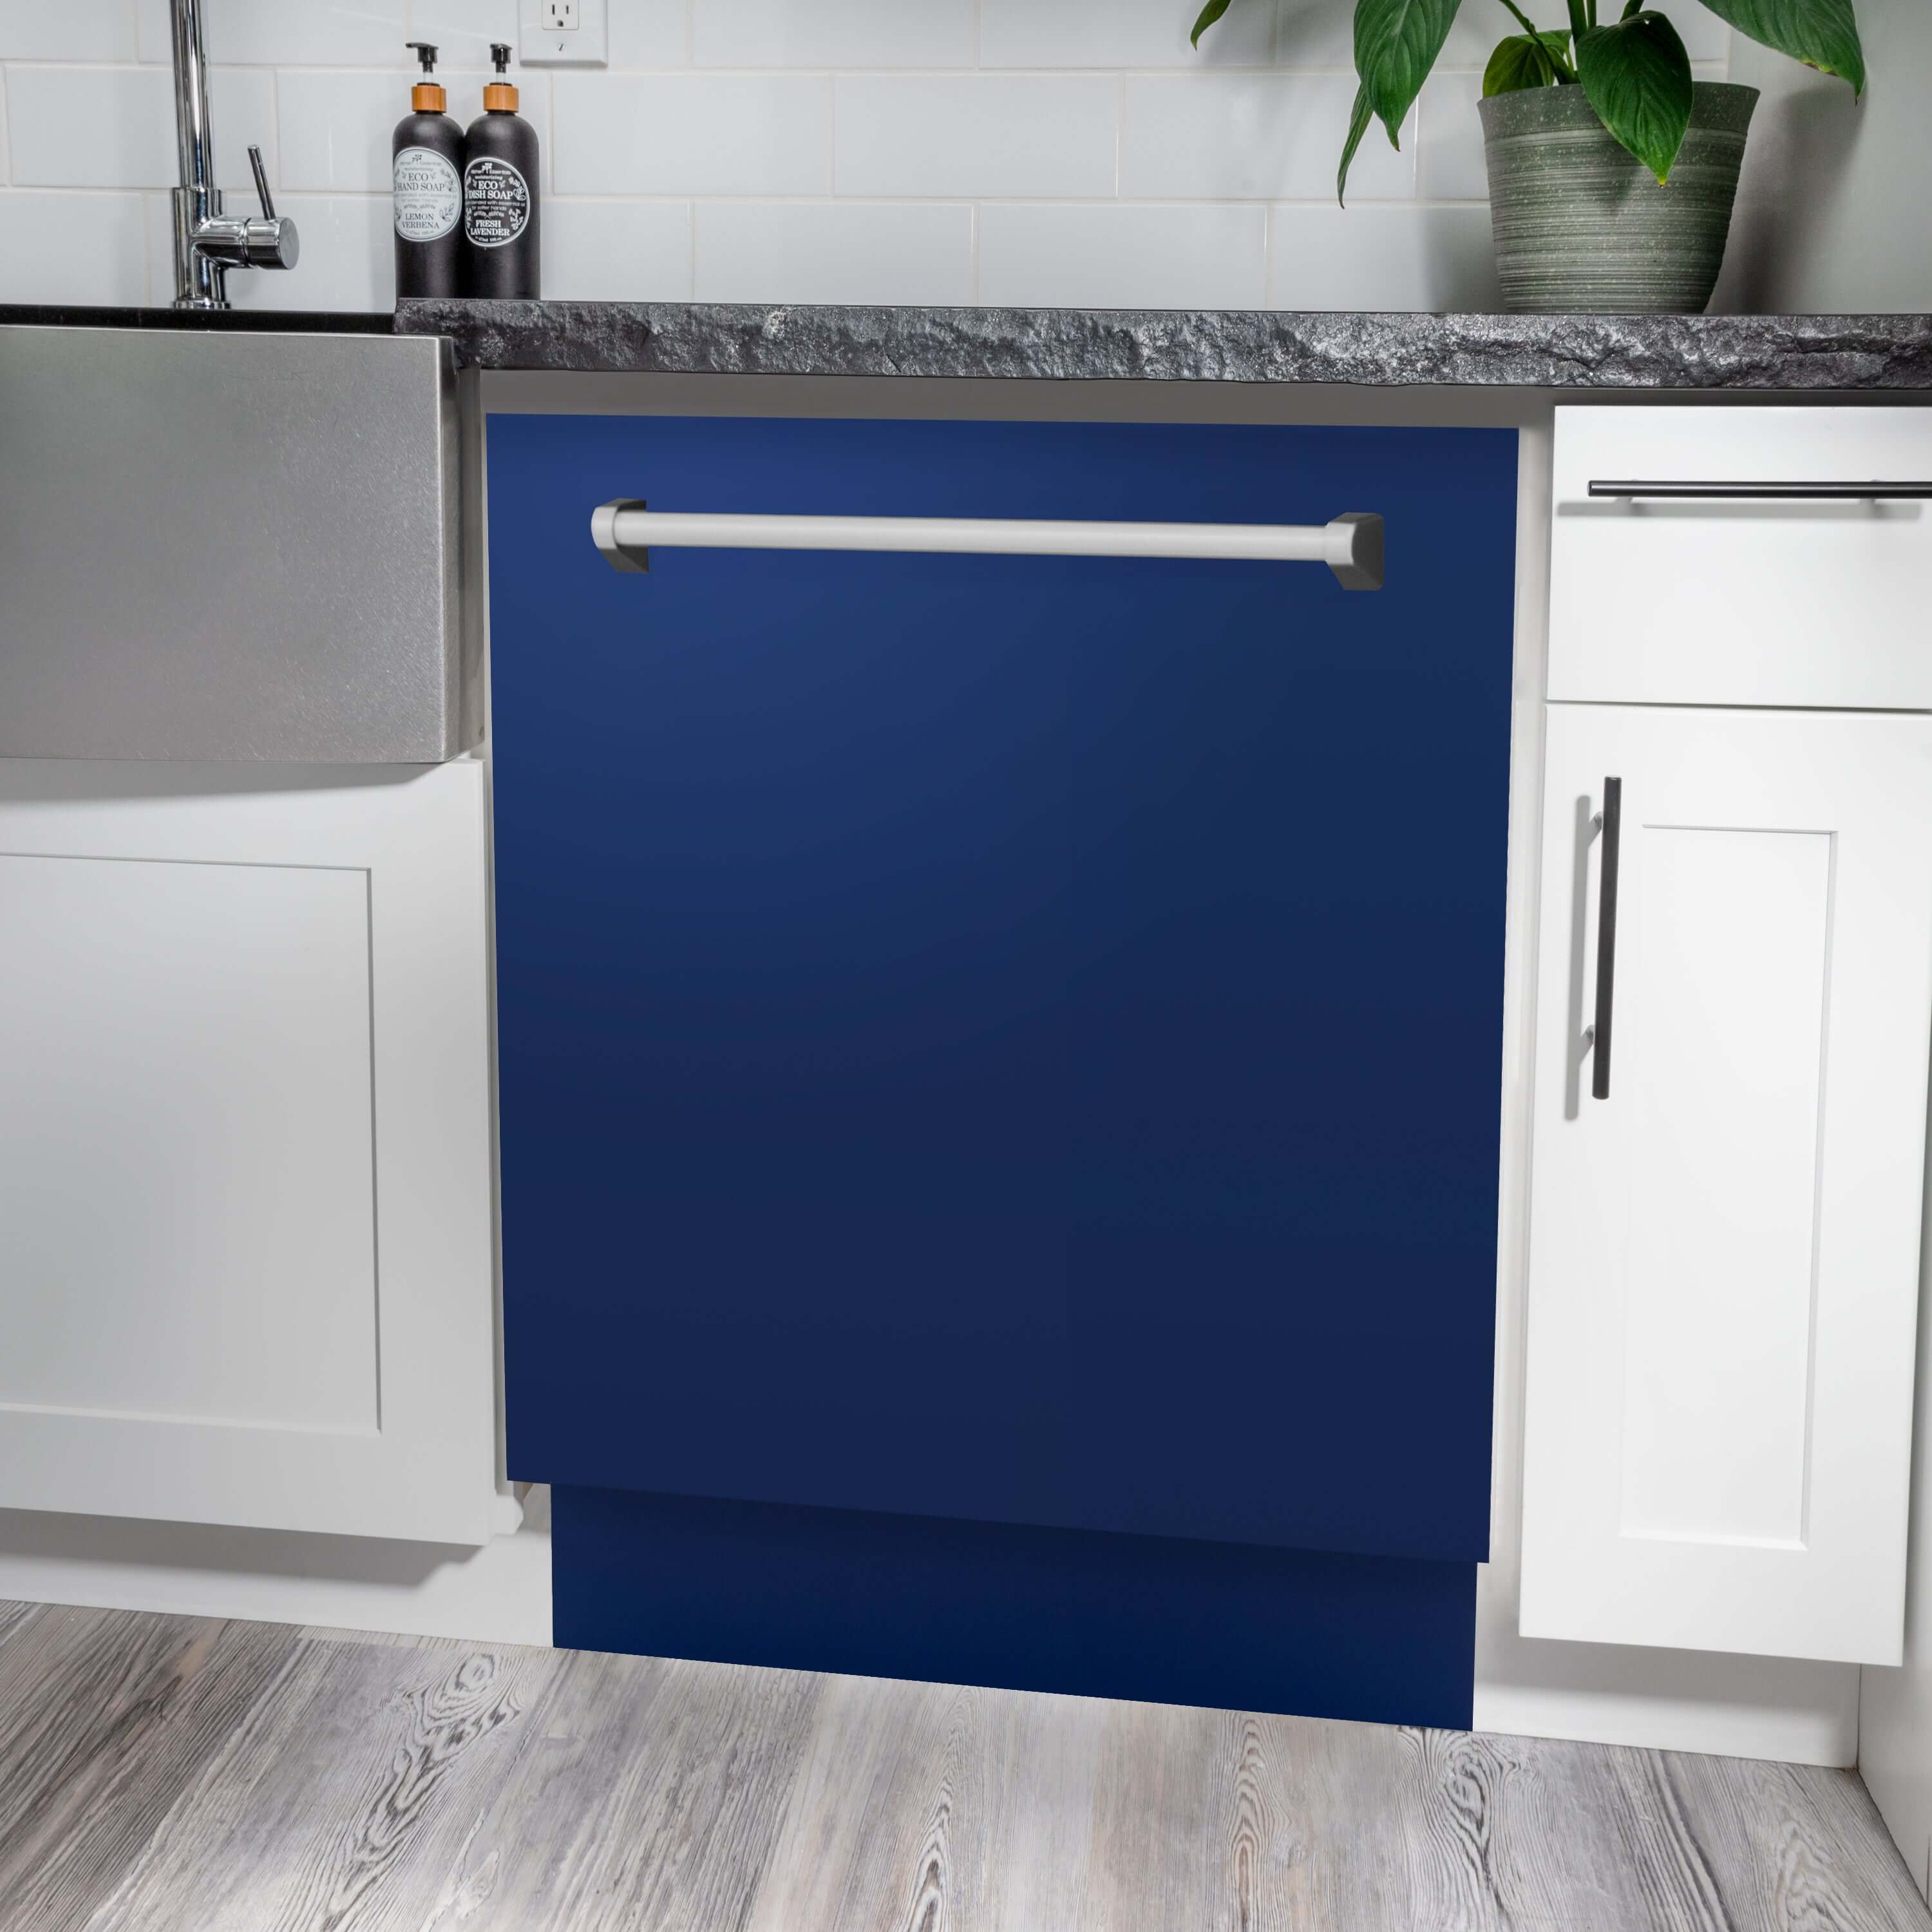  ZLINE 24 in. Monument Dishwasher with Blue Gloss Panel (DWMT-BG-24) installed in a modern farmhouse style kitchen next to apron mount sink